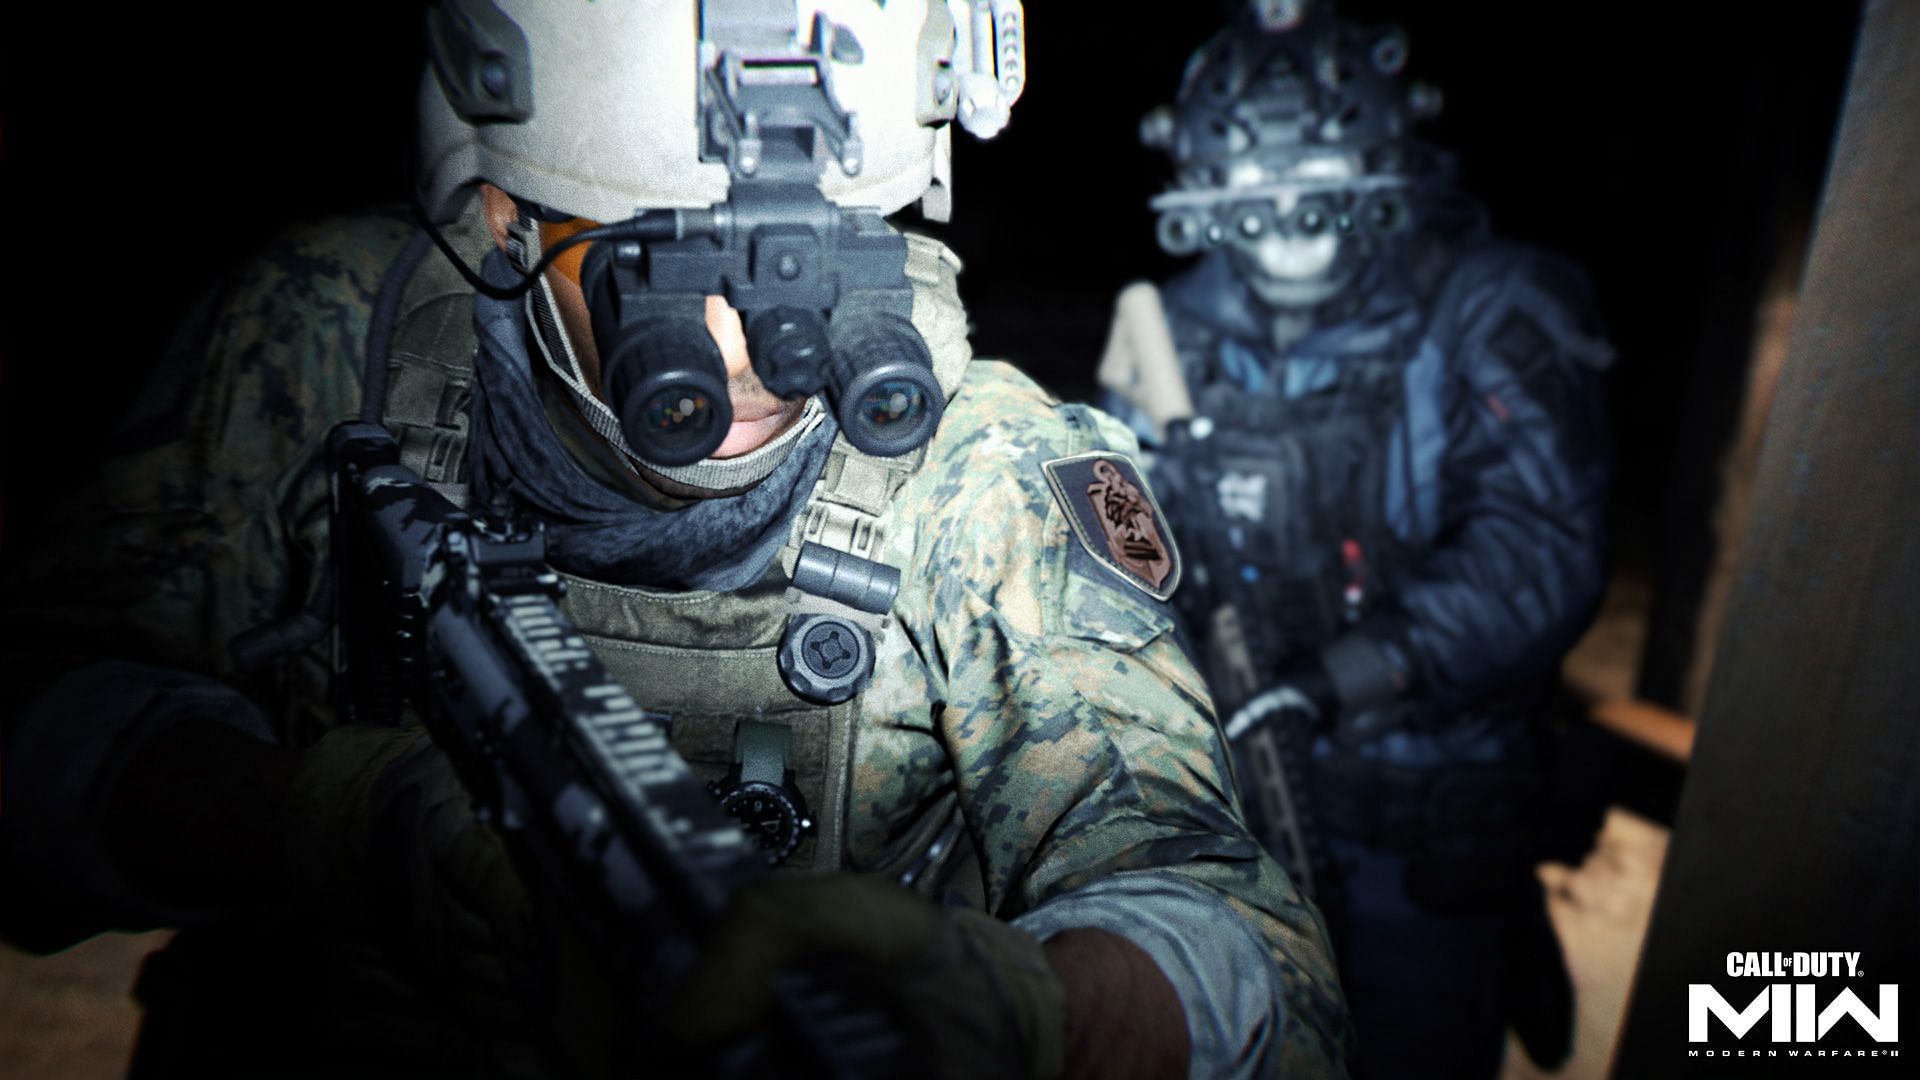 Modern Warfare II's campaign launch sees huge success on Steam